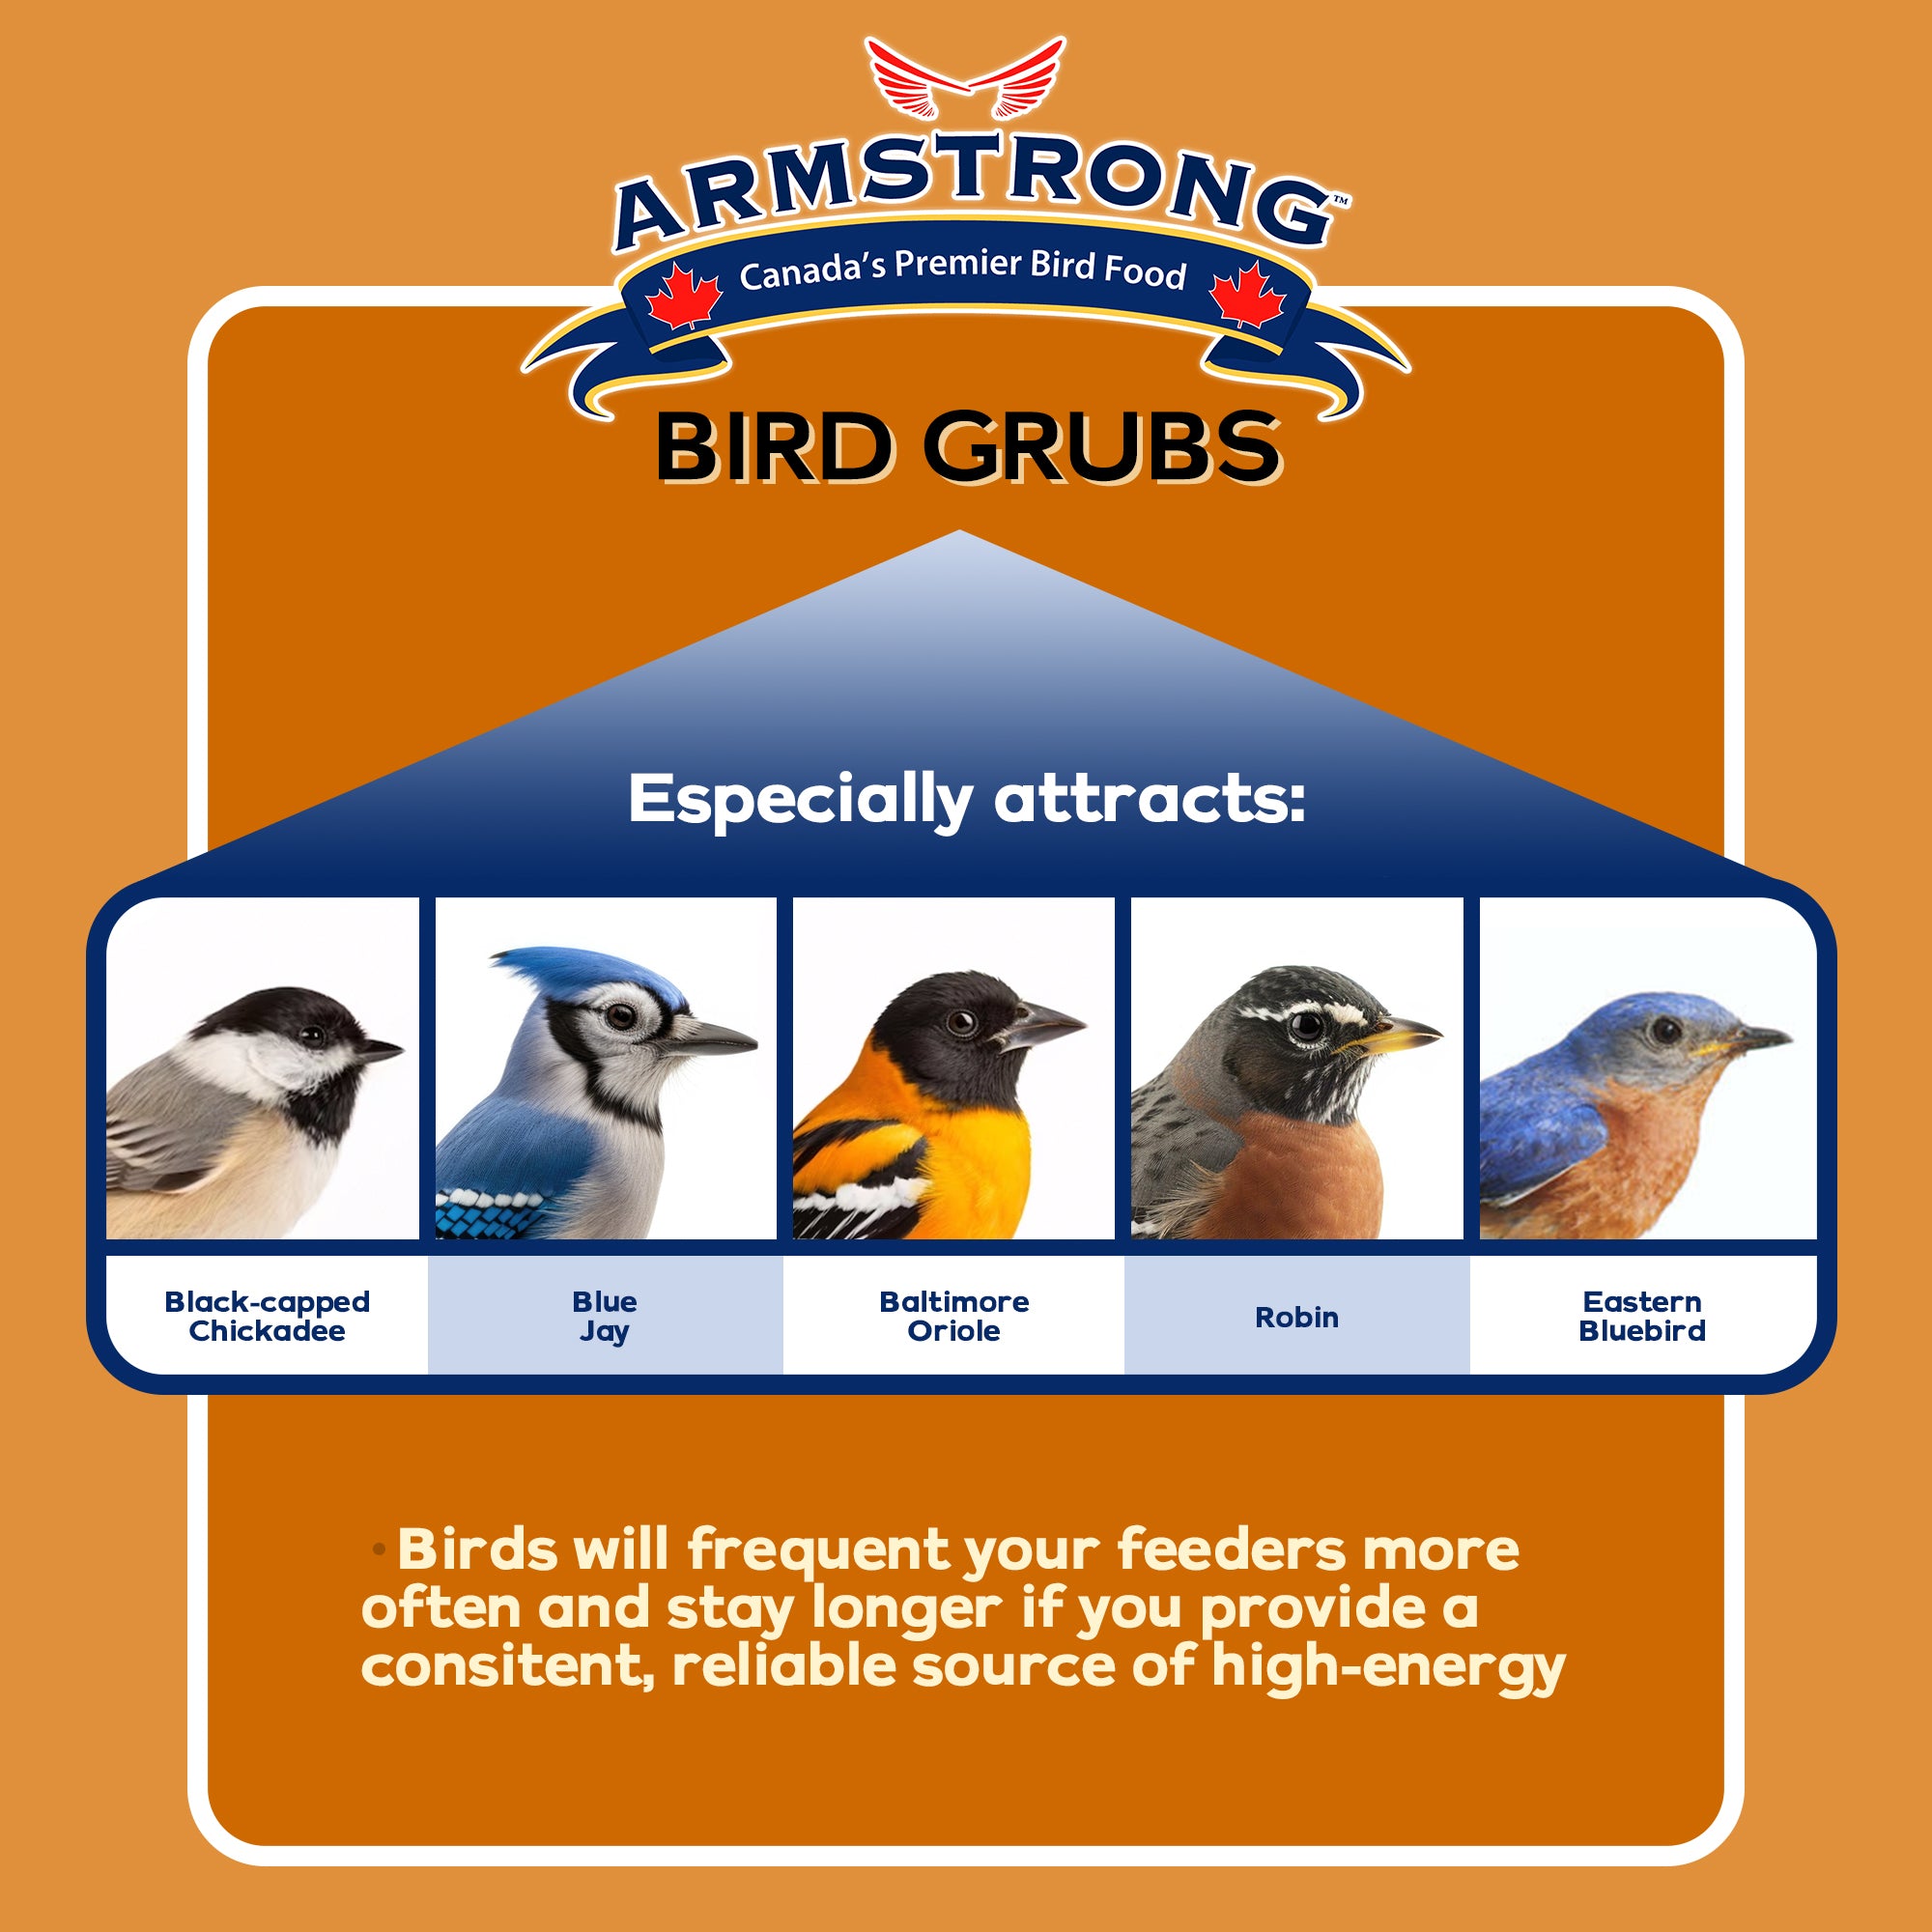 Armstrong Wild Bird Food Mealworm Alternative Bird Grubs Bird Seed Blend